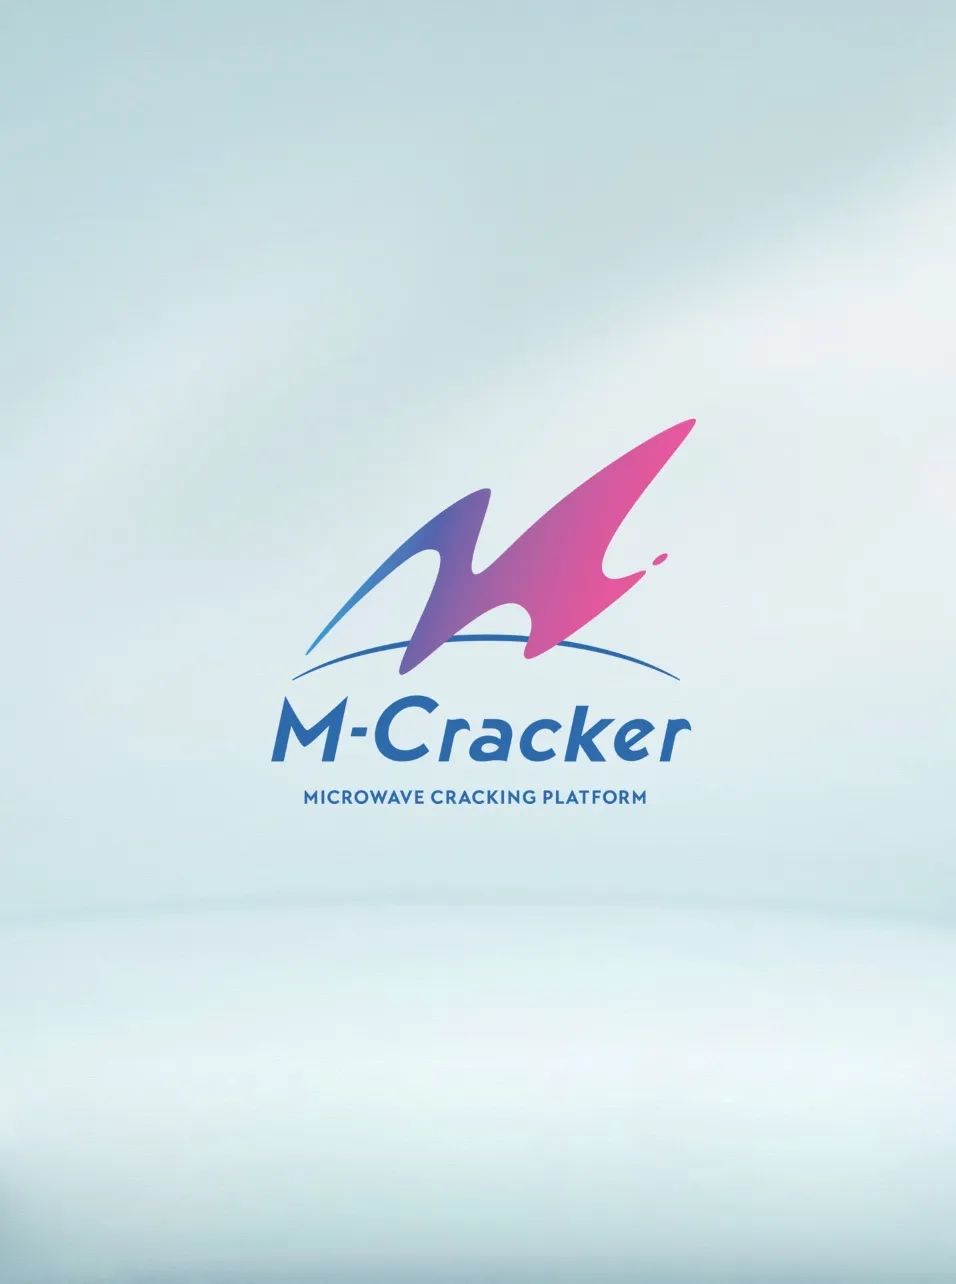 M-cracker